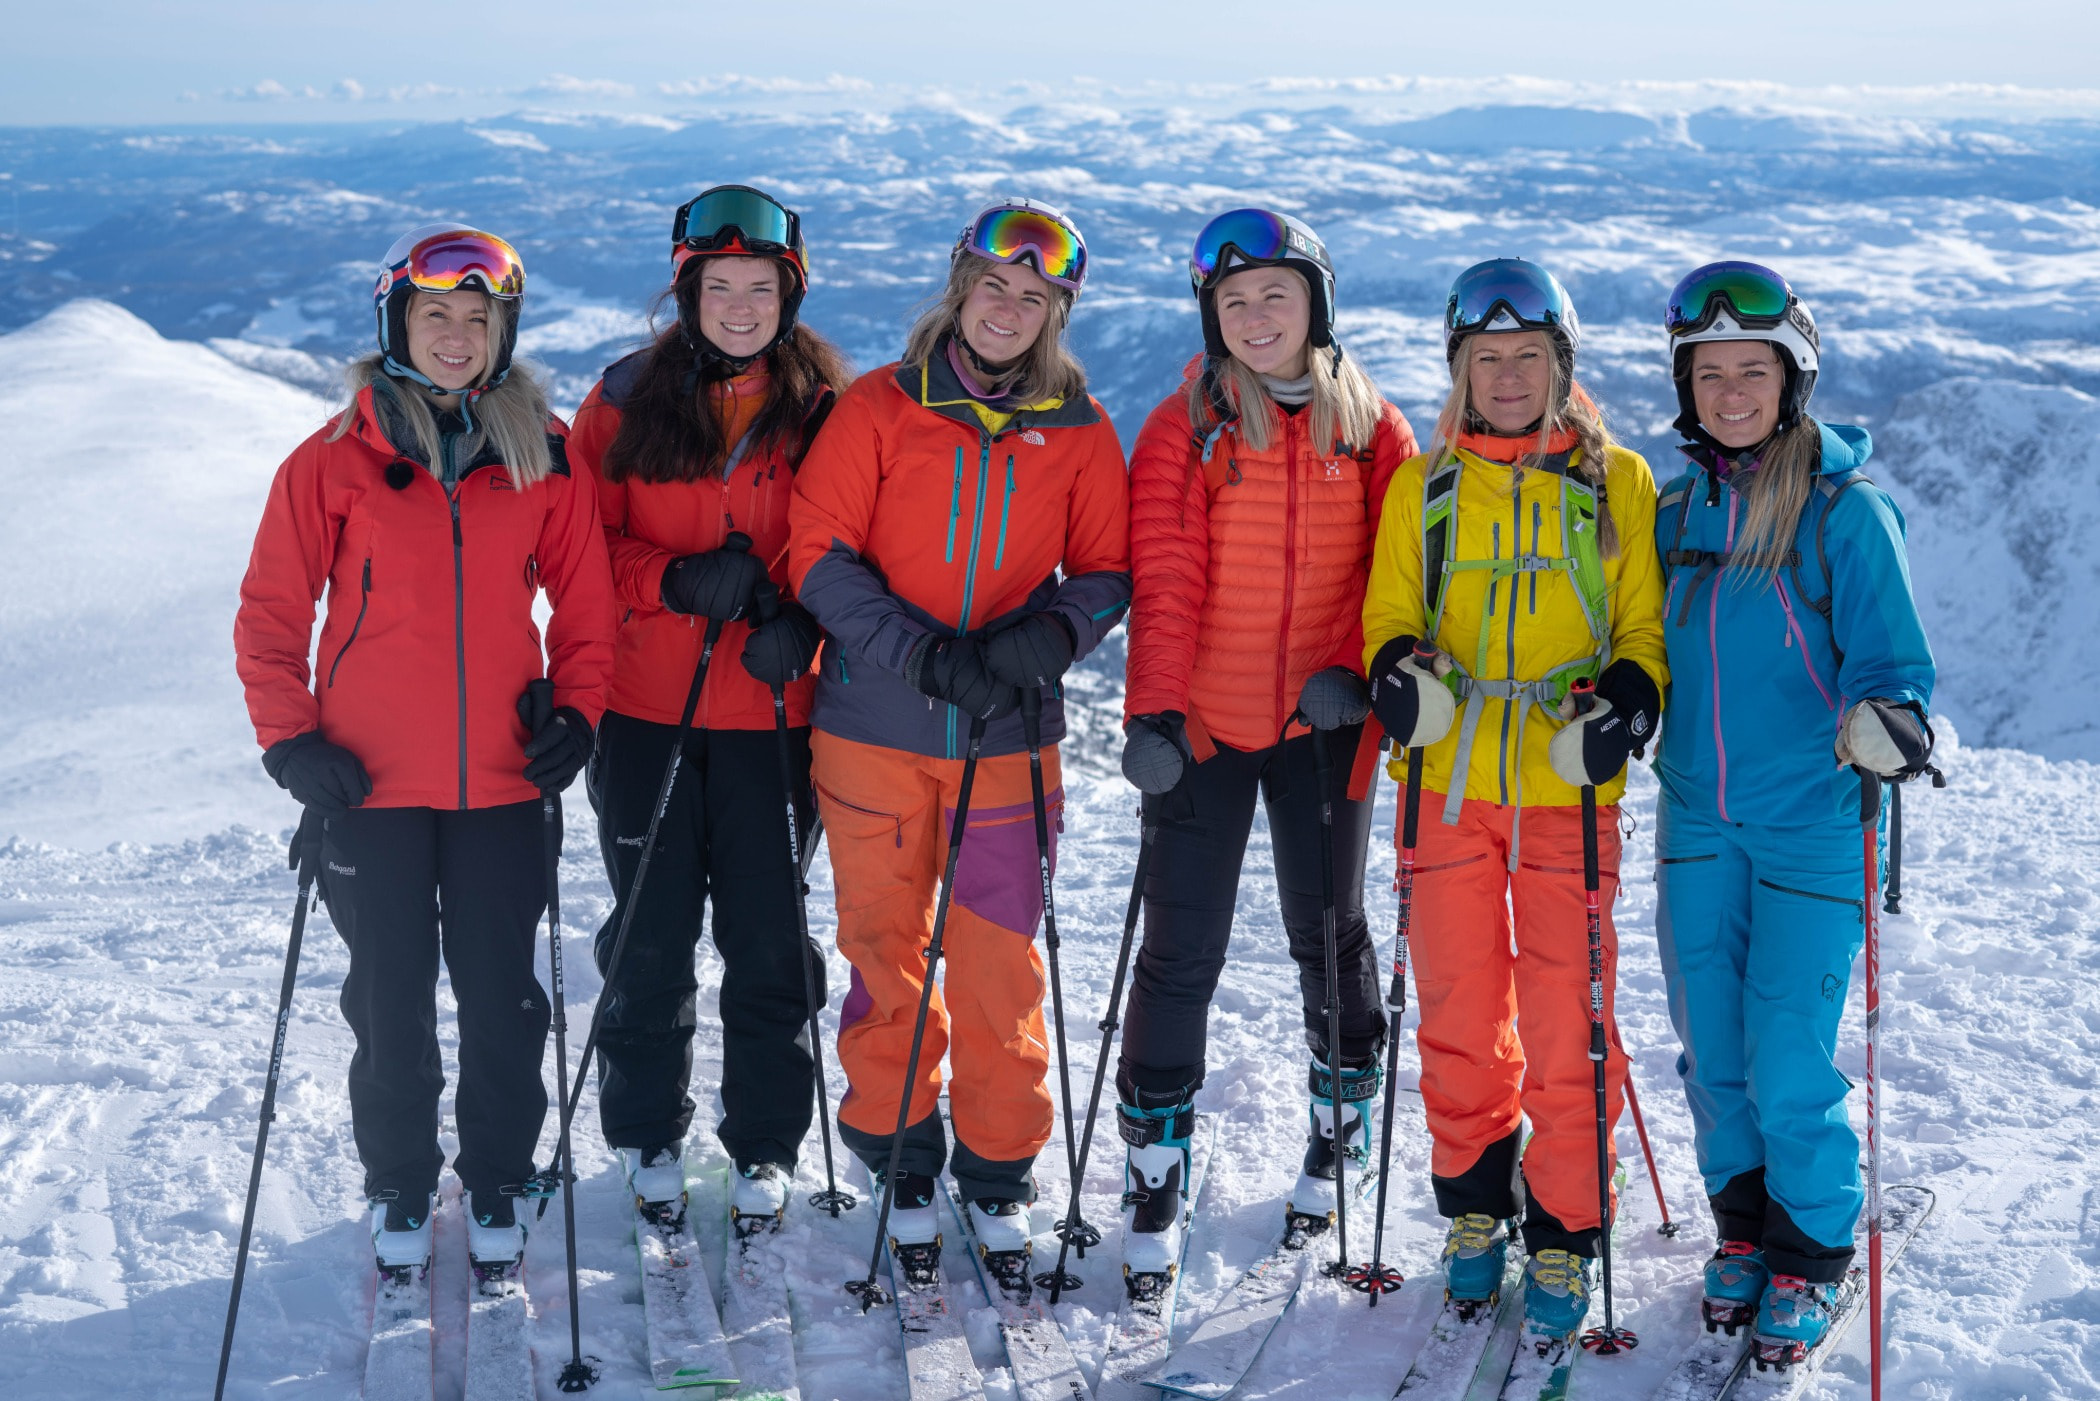 Outdoor recreation, Ski Equipment, Mountain, Winter, Mountaineering, Snow